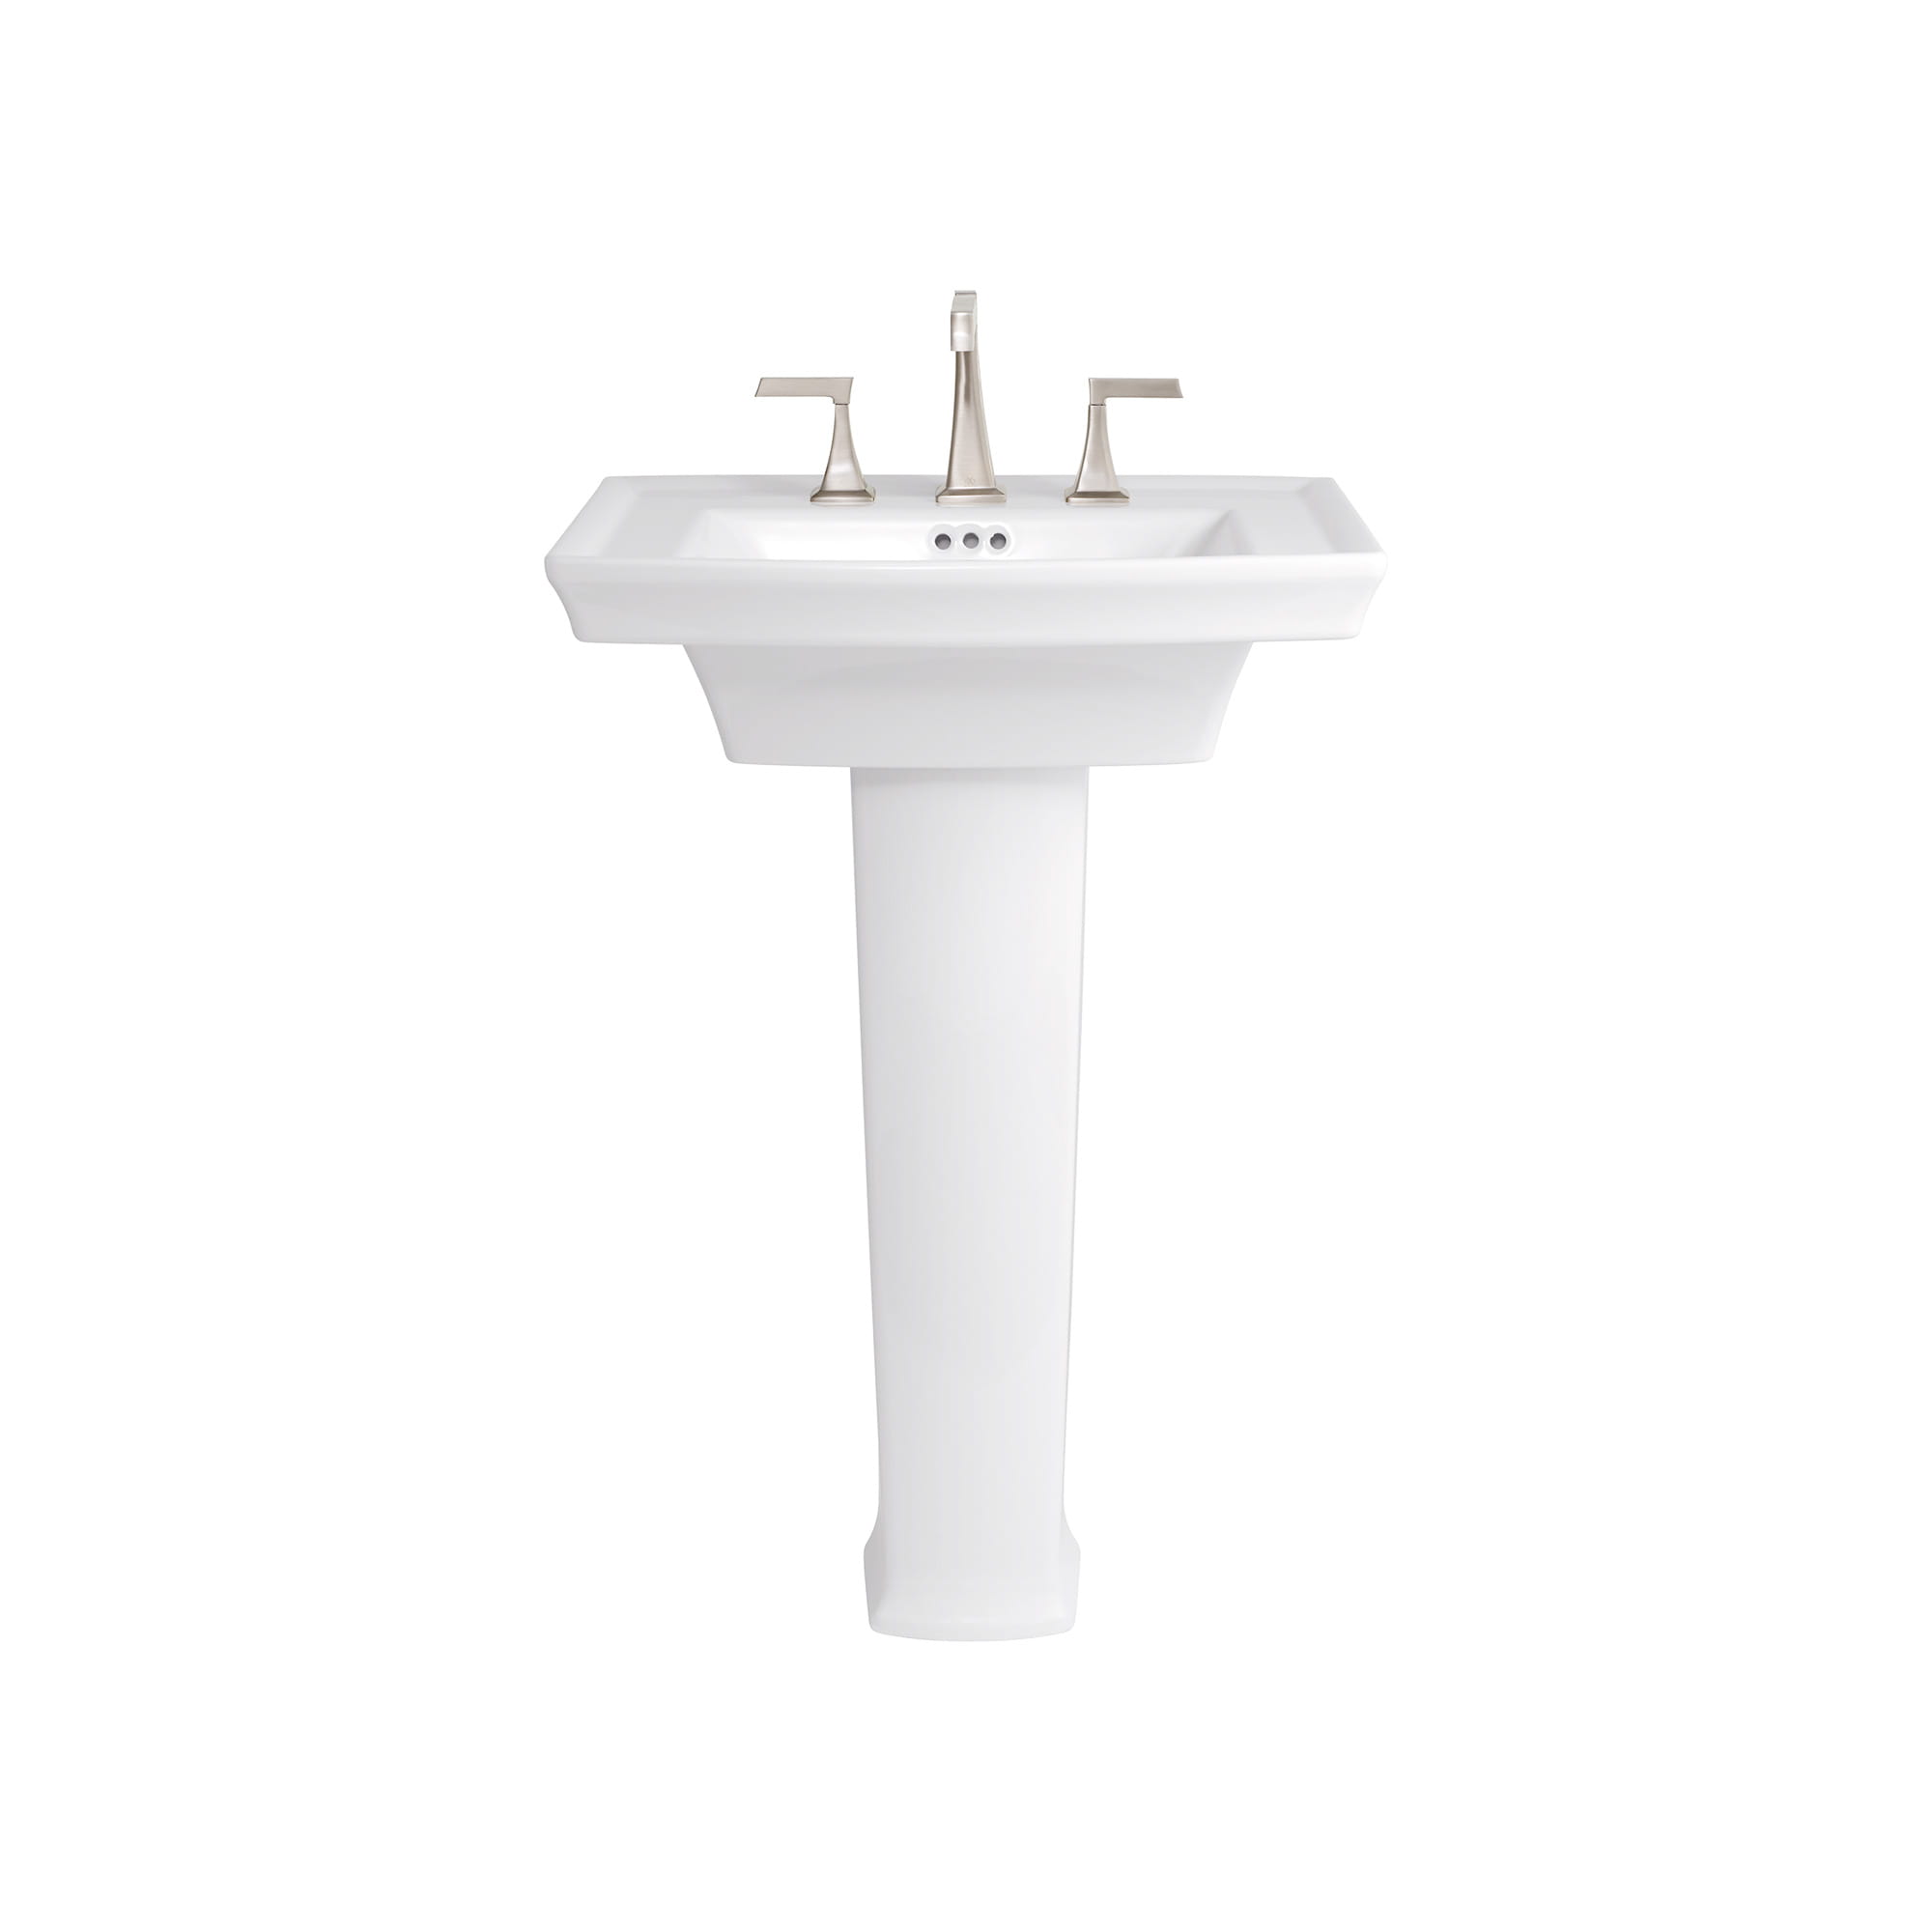 Wyatt® Pedestal Sink Top, 3-Hole with Pedestal Leg